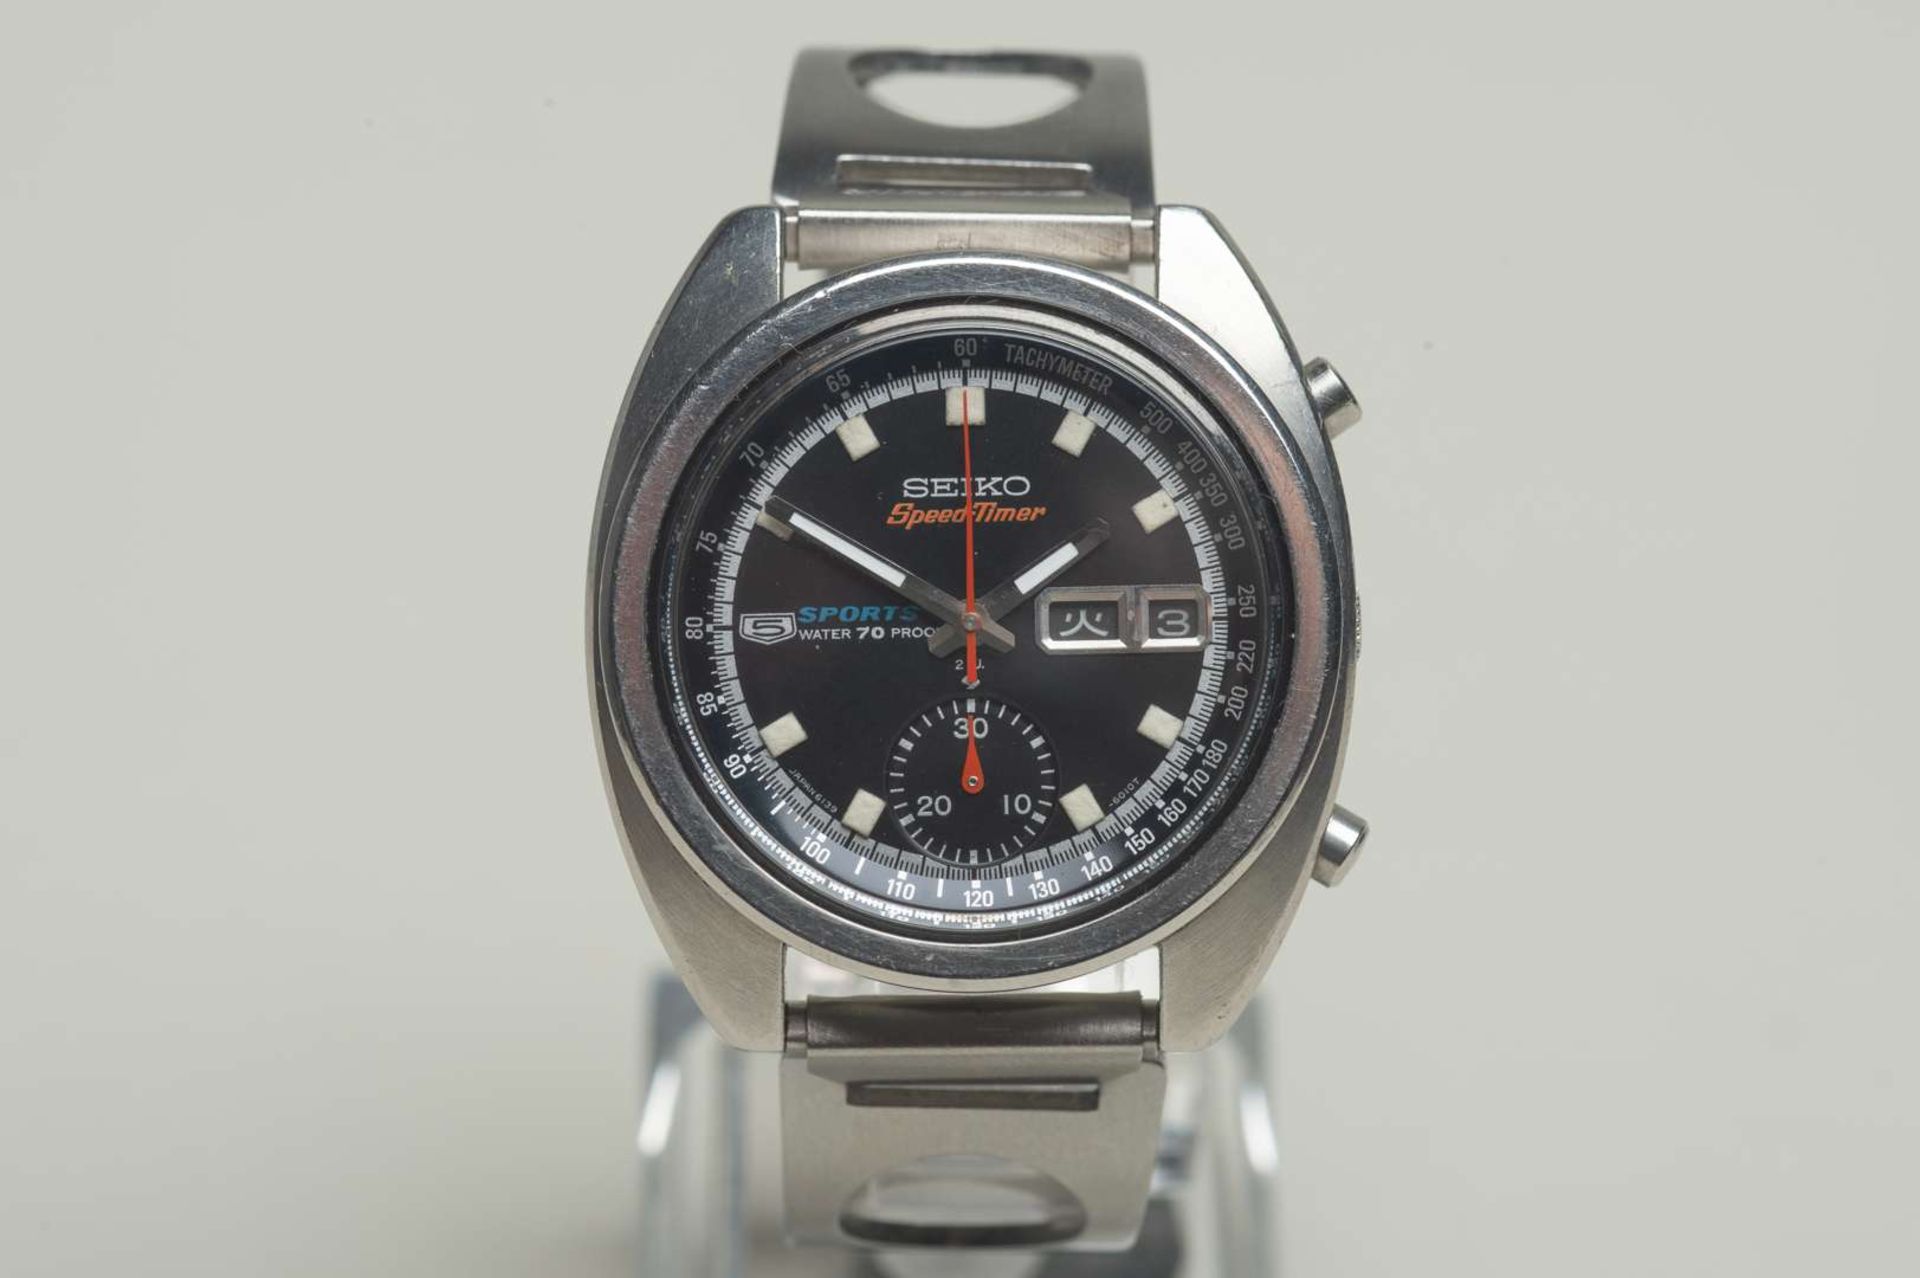 SEIKO. a 1970 Seiko SpeedTimer “Bruce Lee”, stainless steel, automatic, chronograph wristwatch.